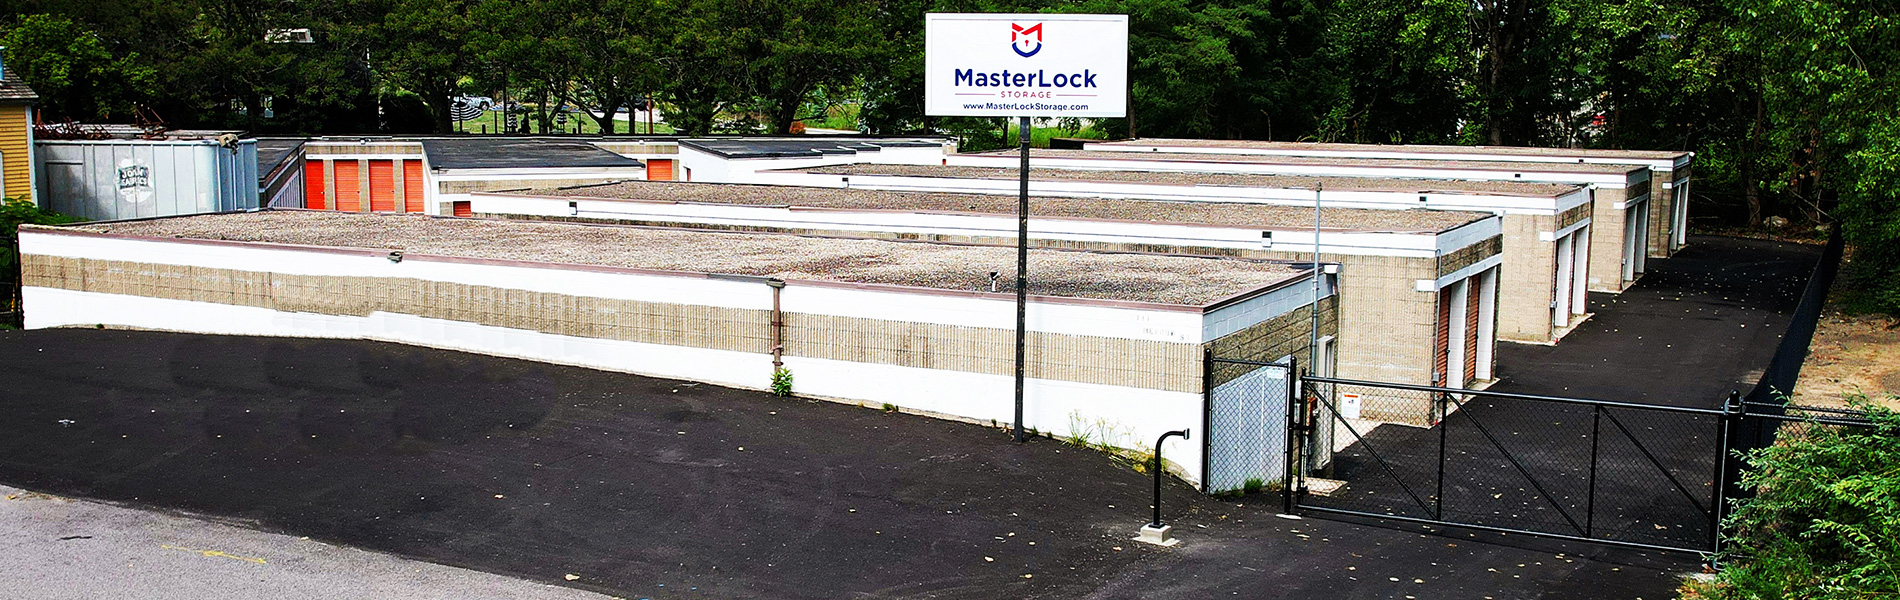 MasterLock Storage sign and entrance